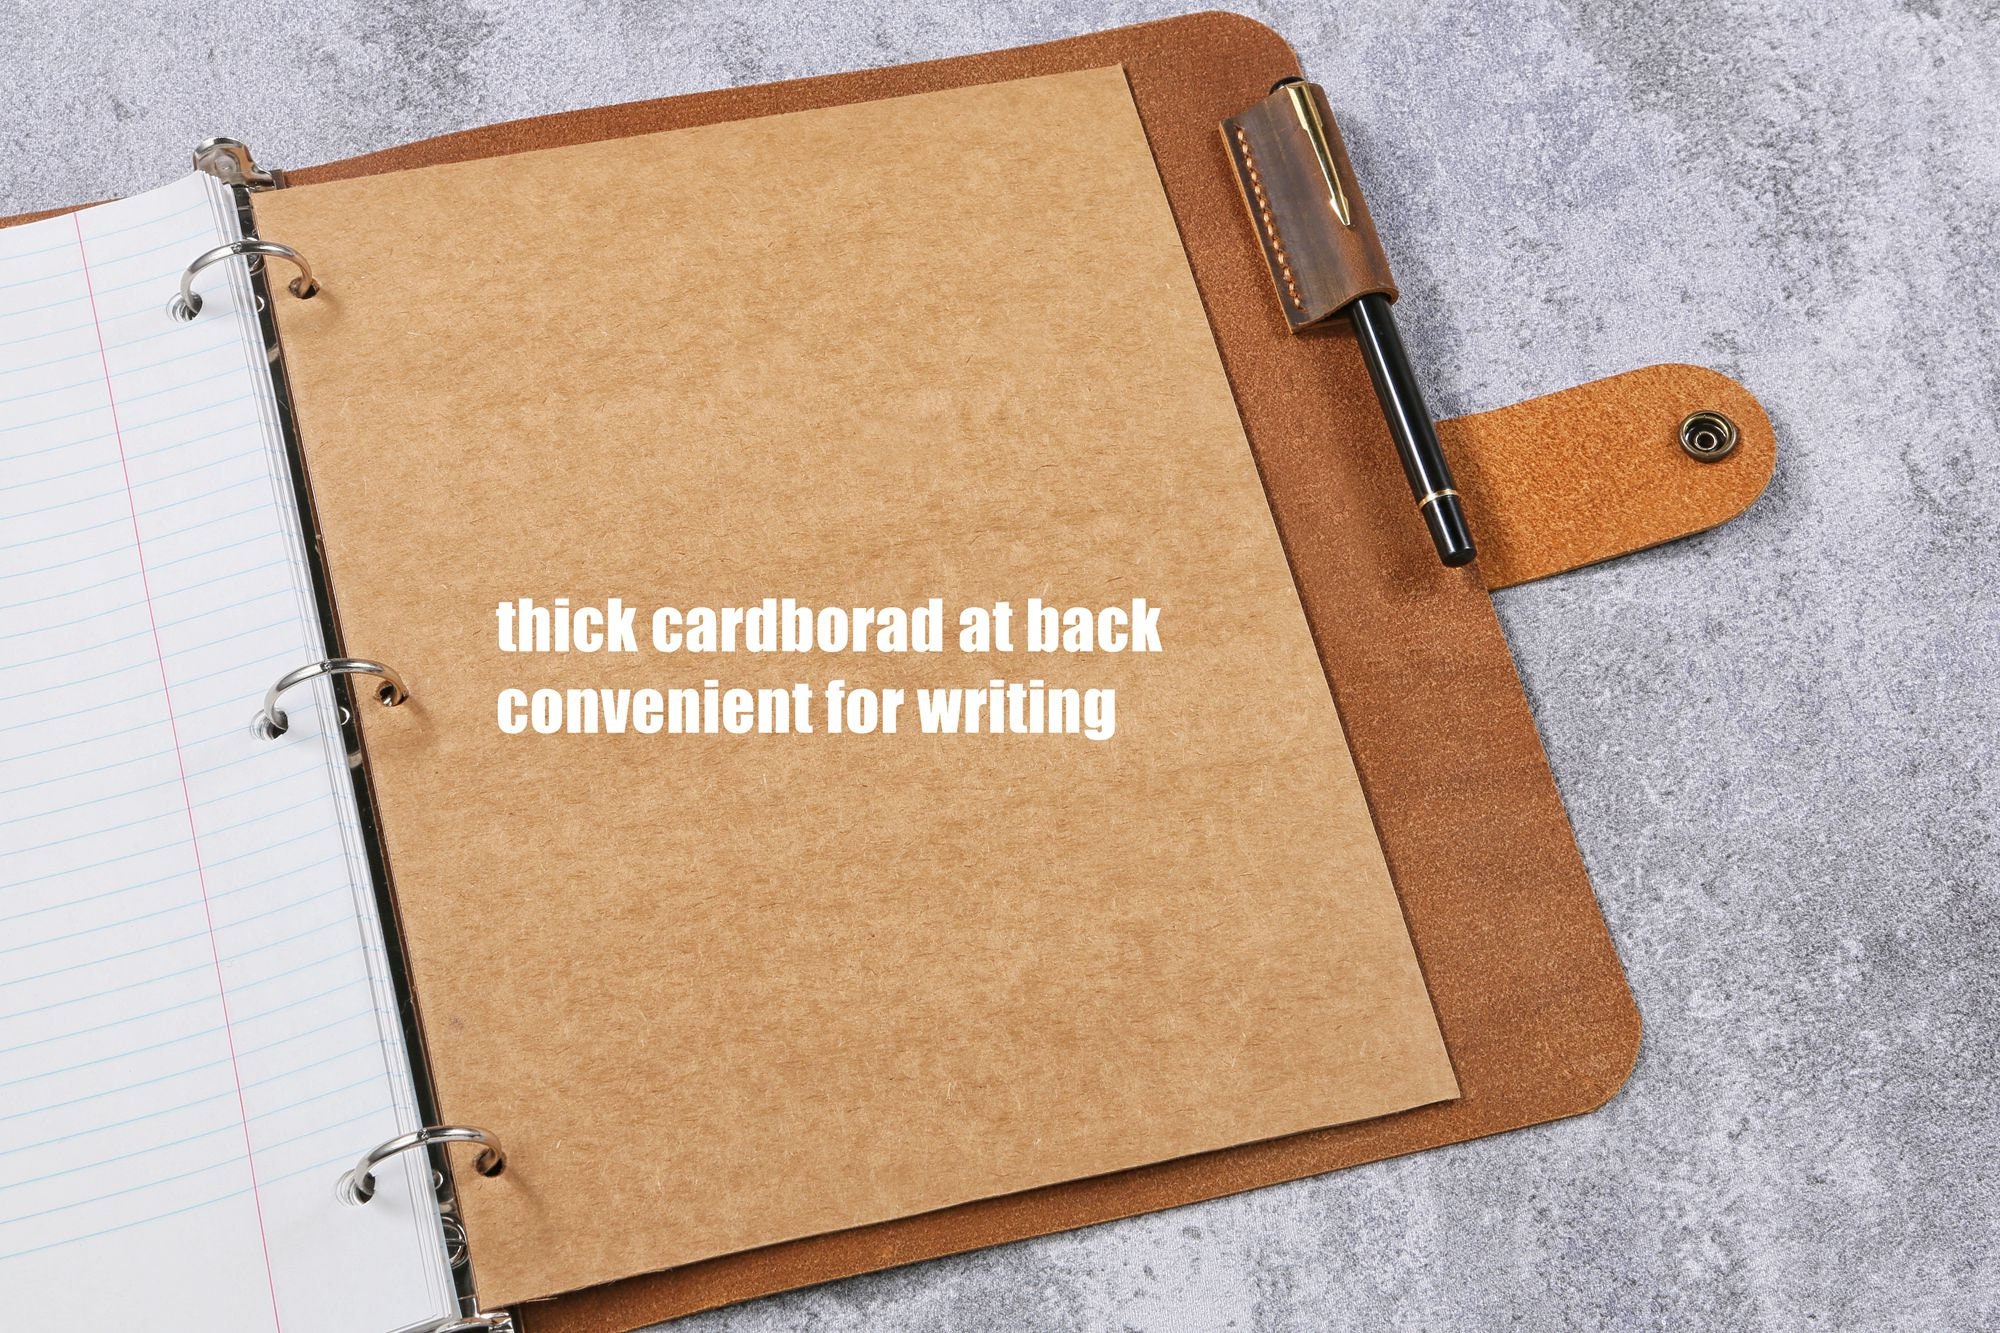 Personalized leather 3 ring binder portfolio folder with pockets – DMleather